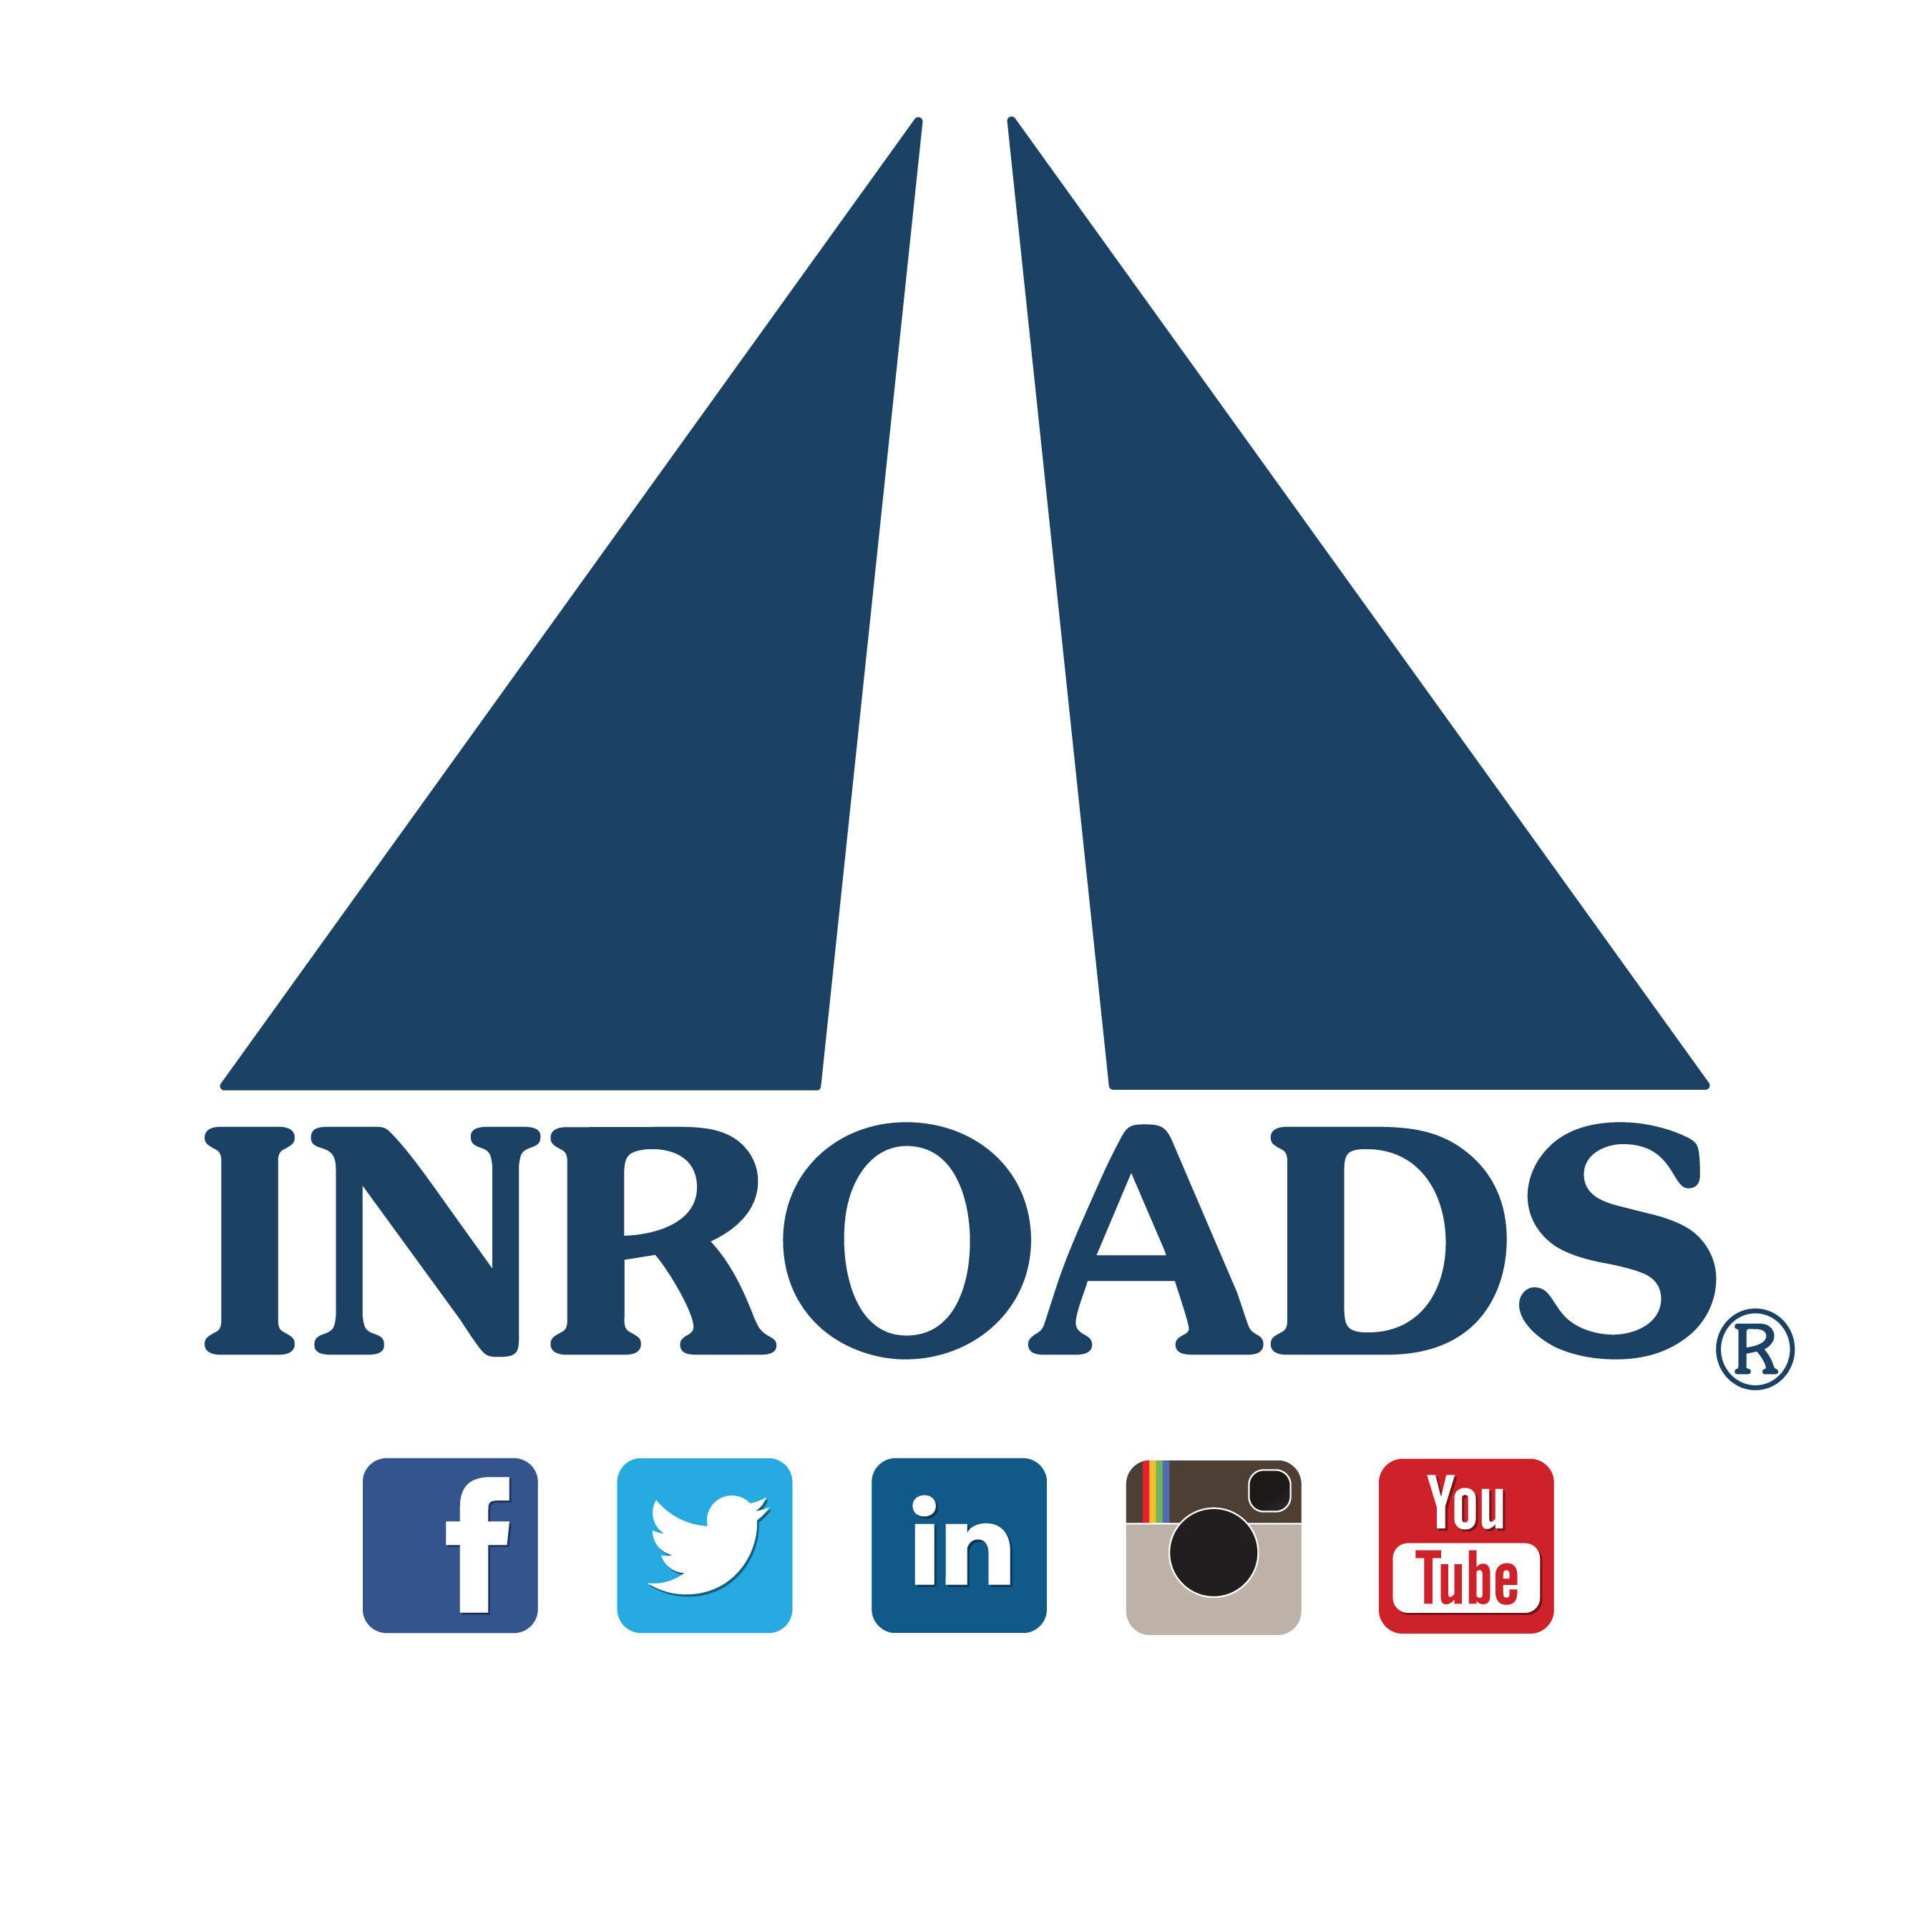 Inroads Logo - INROADS Announces Top 10 Strategic Corporate Partners